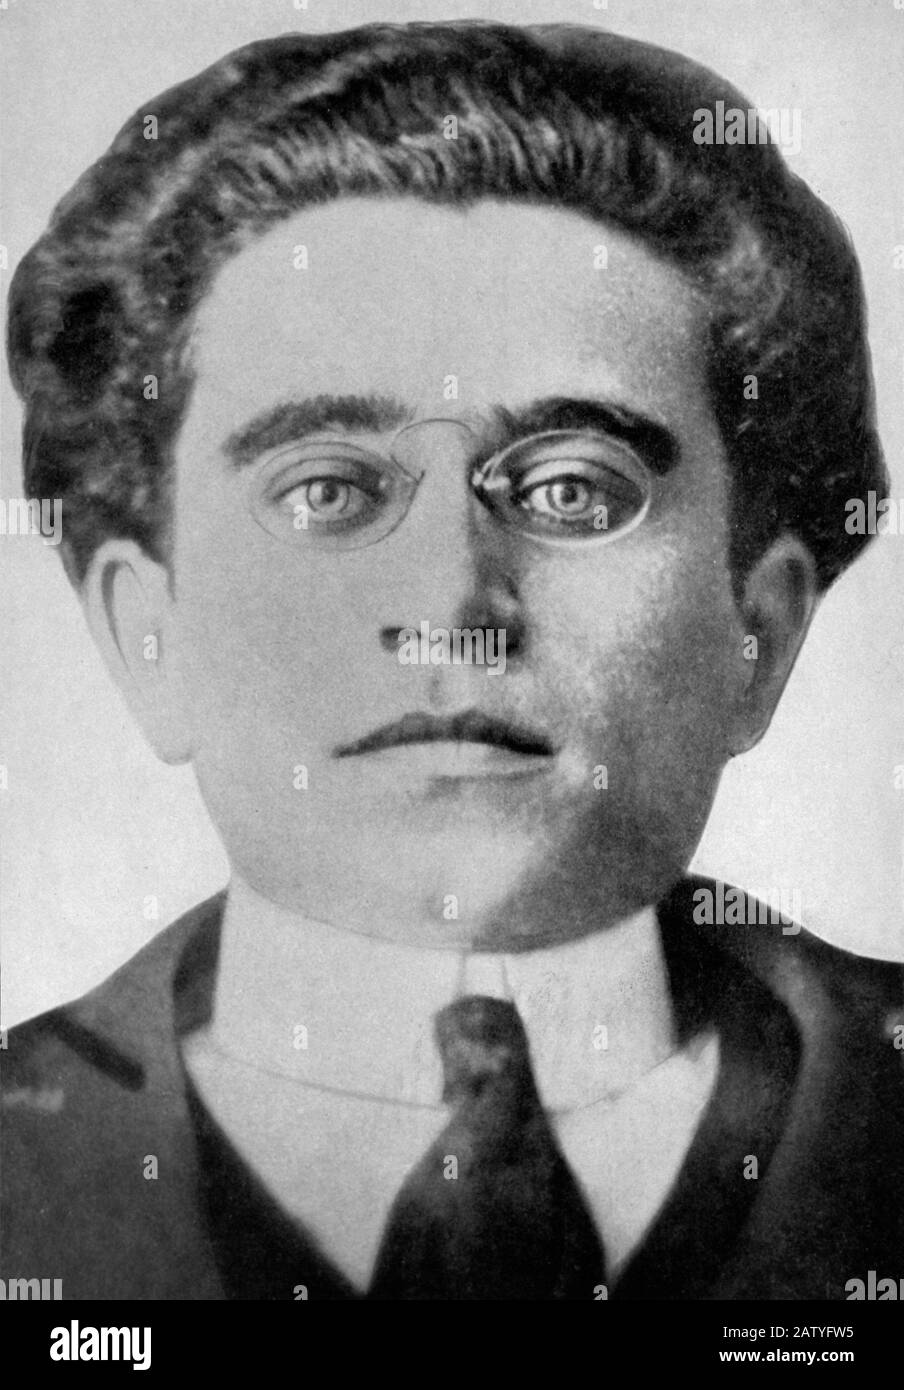 ANTONIO GRAMSCI ( Ales , Oristano 1891 - Roma 1937 ) italienischer Intellektueller, Schriftsteller und Kommunist - PARTITO COMUNISTA ITALIANO - PCI - POLITICO - Stockfoto